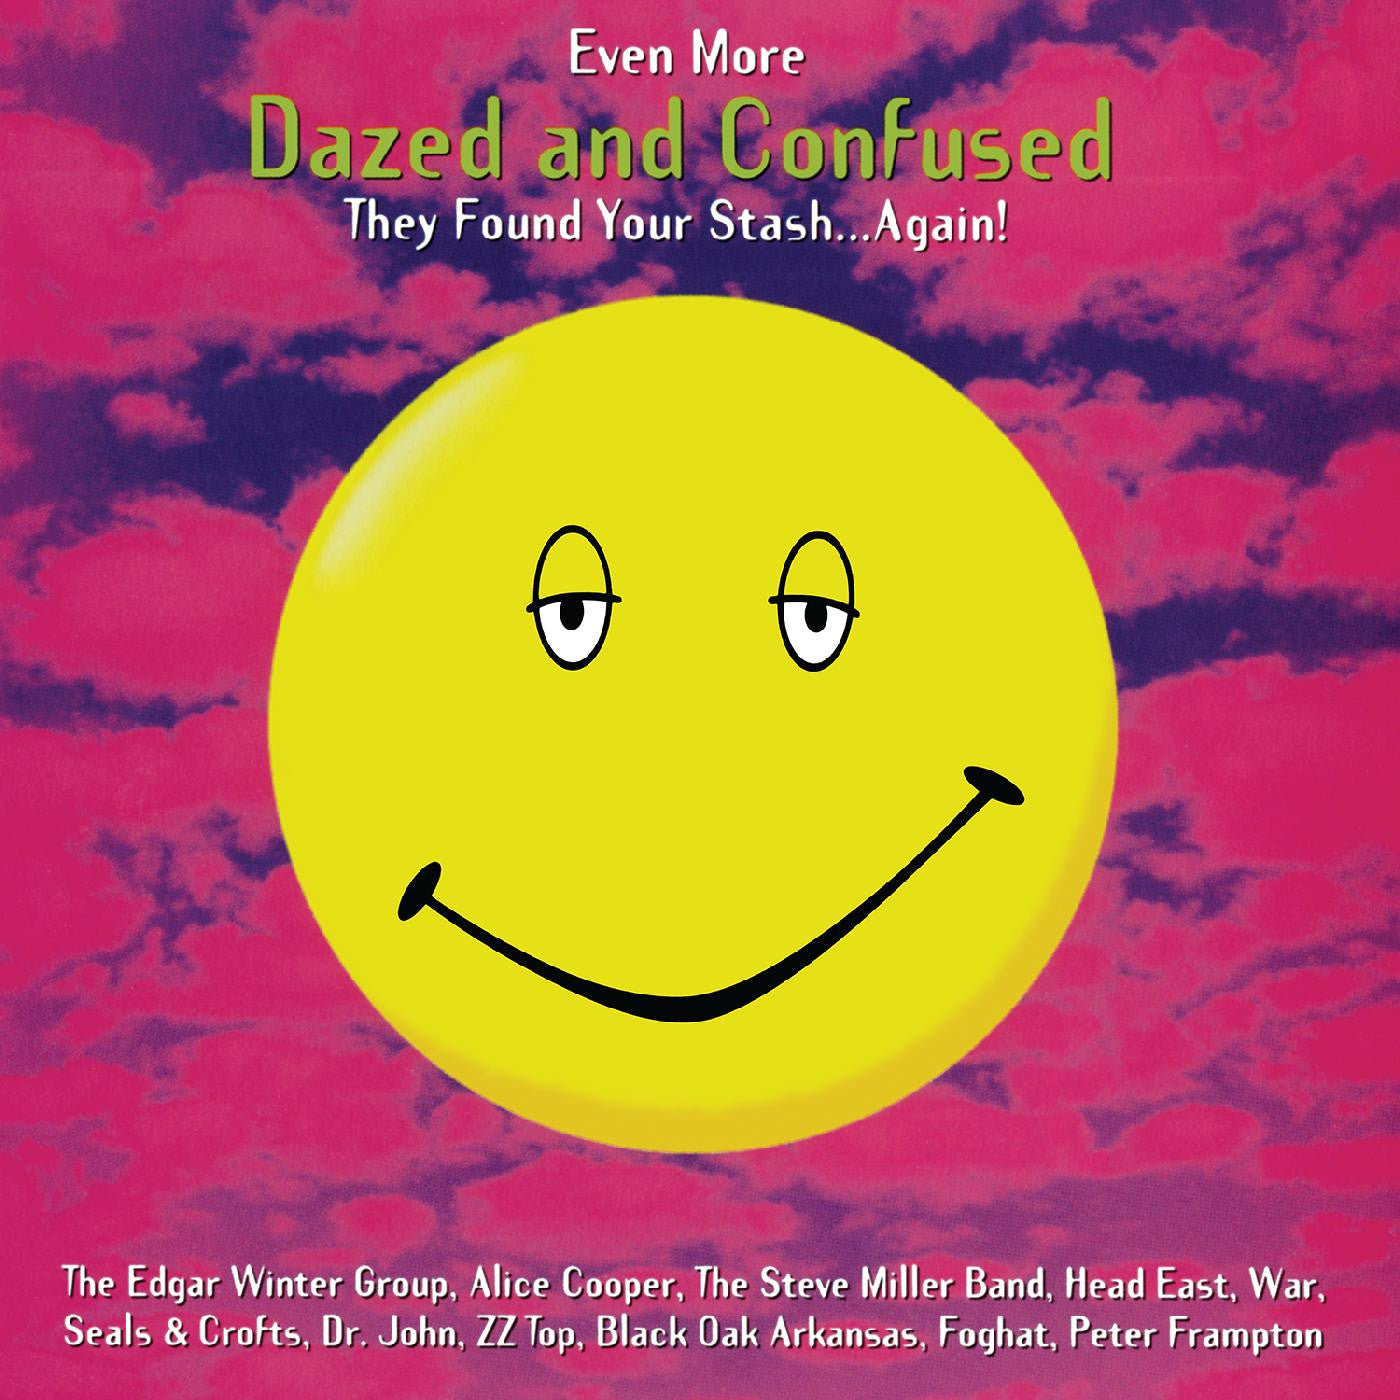 Even More Dazed and Confused - Soundtrack (Vinyl LP)